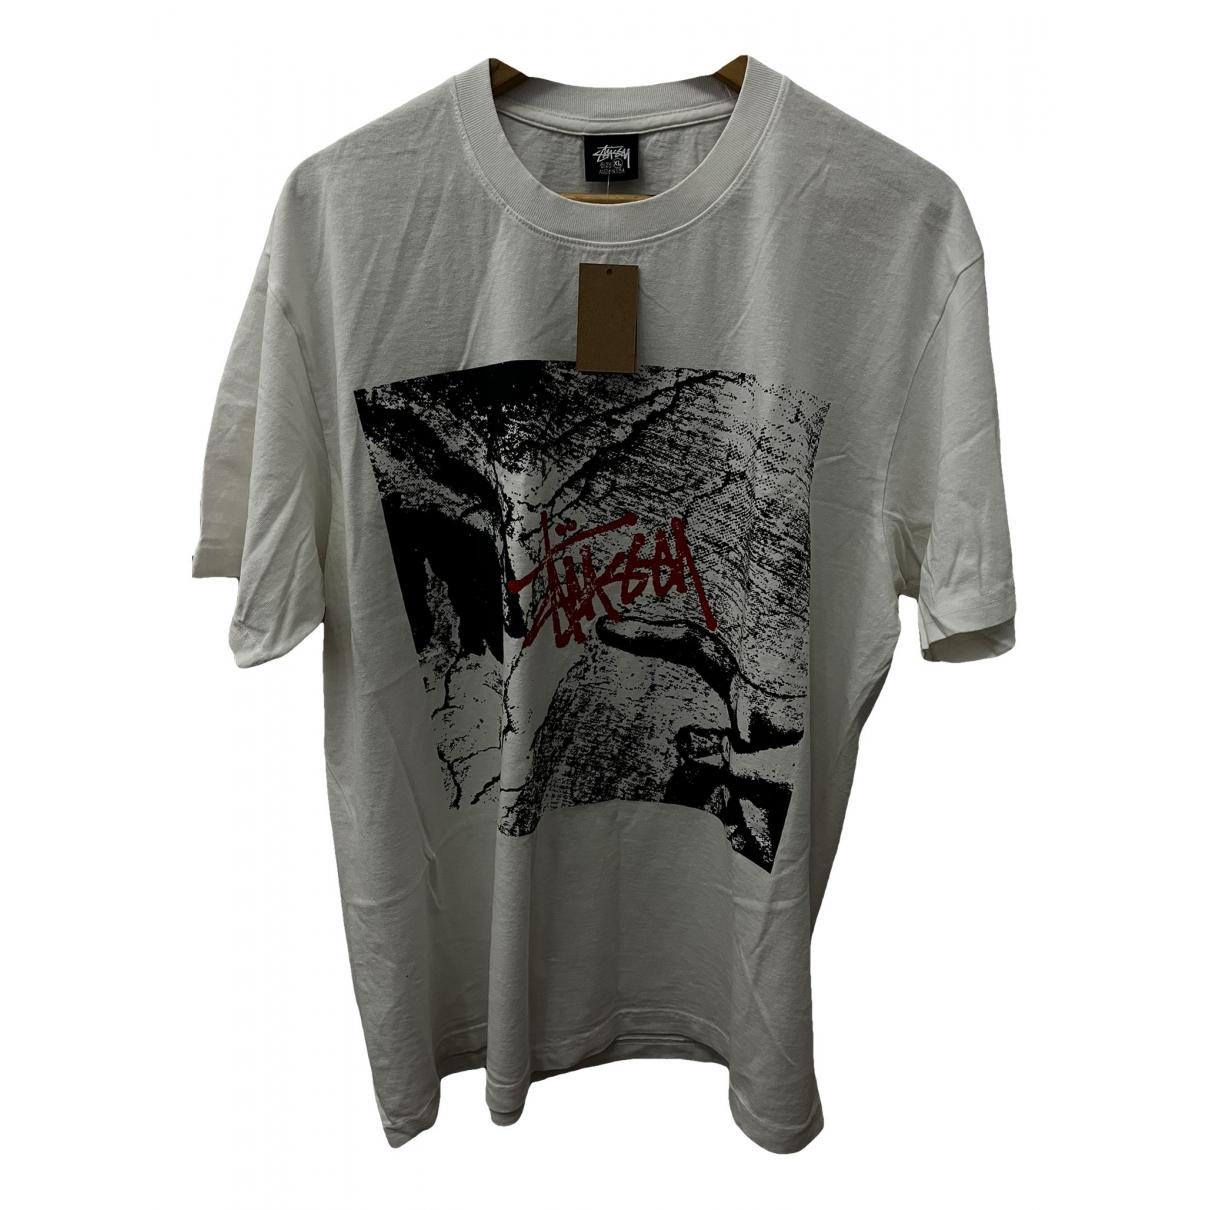 T-shirt Human Made Black size L International in Cotton - 27580173